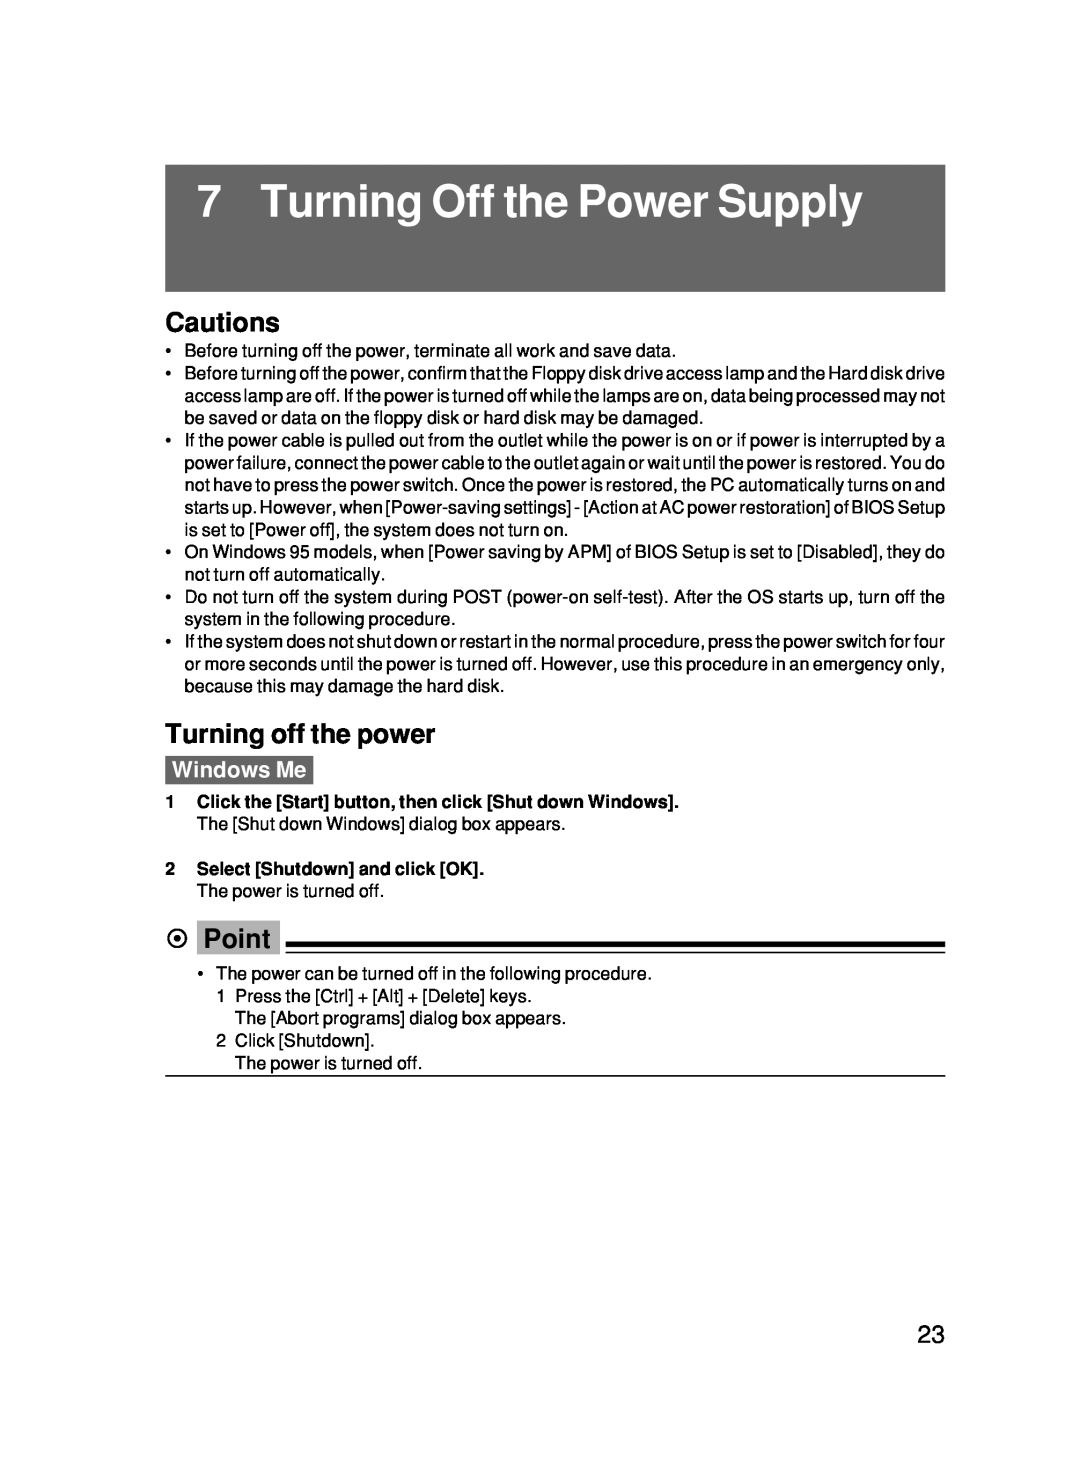 Fujitsu 500 user manual Turning Off the Power Supply, Turning off the power, Windows Me, Cautions, Point 